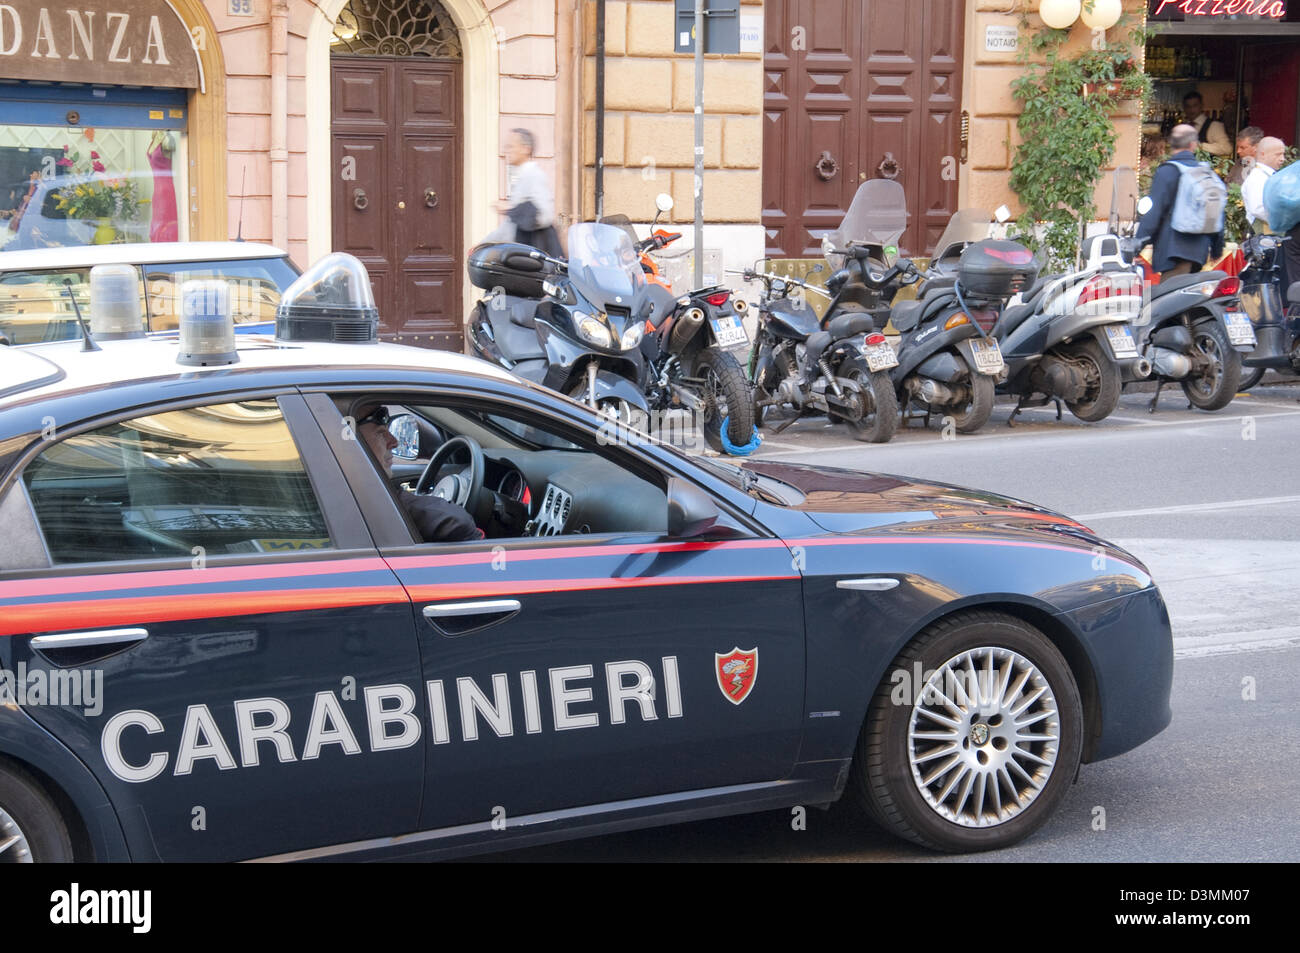 carabinieri vehicle in rome italy Stock Photo